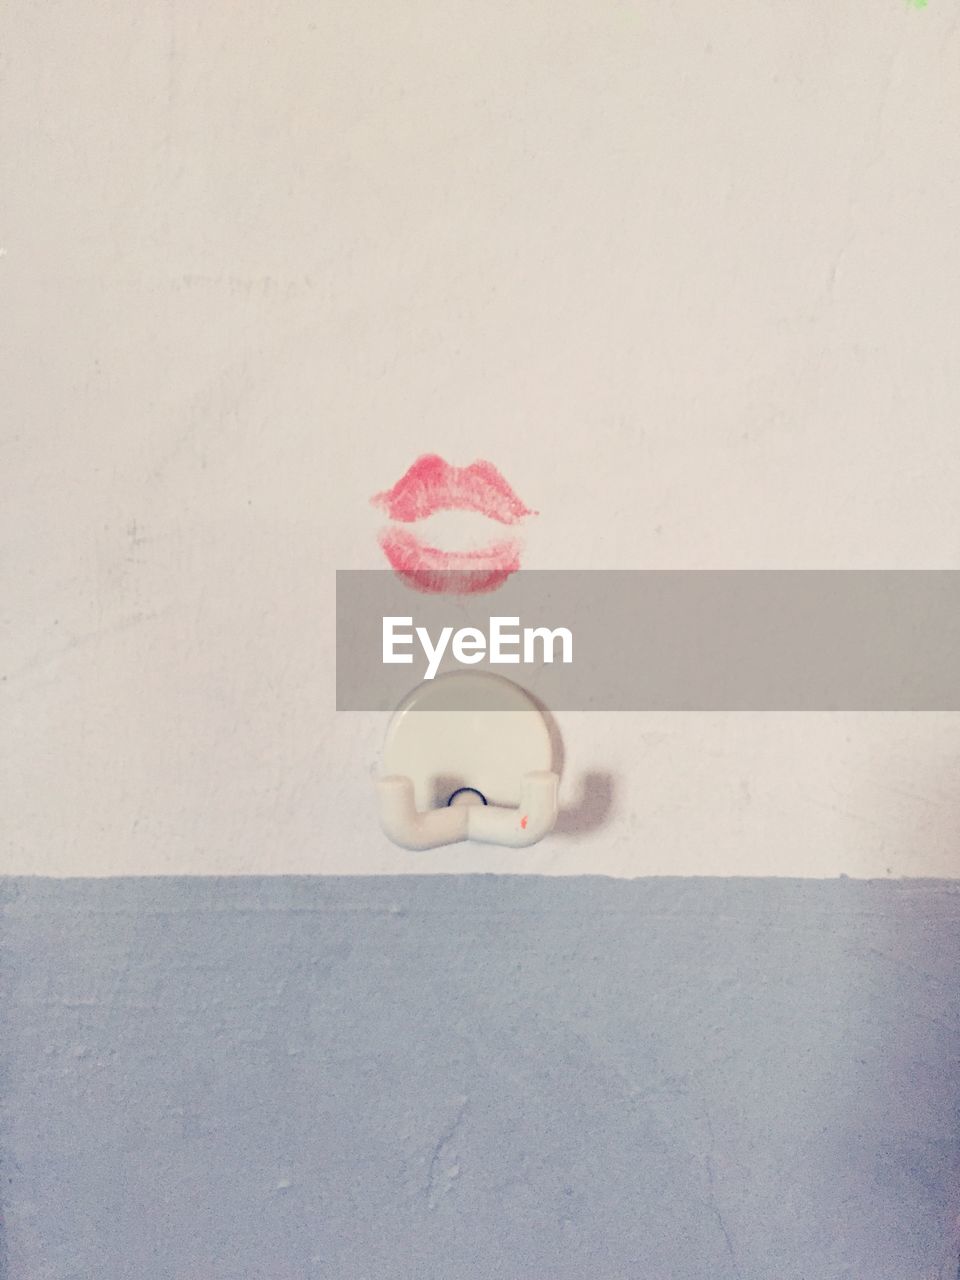 Lipstick kiss above hook on wall